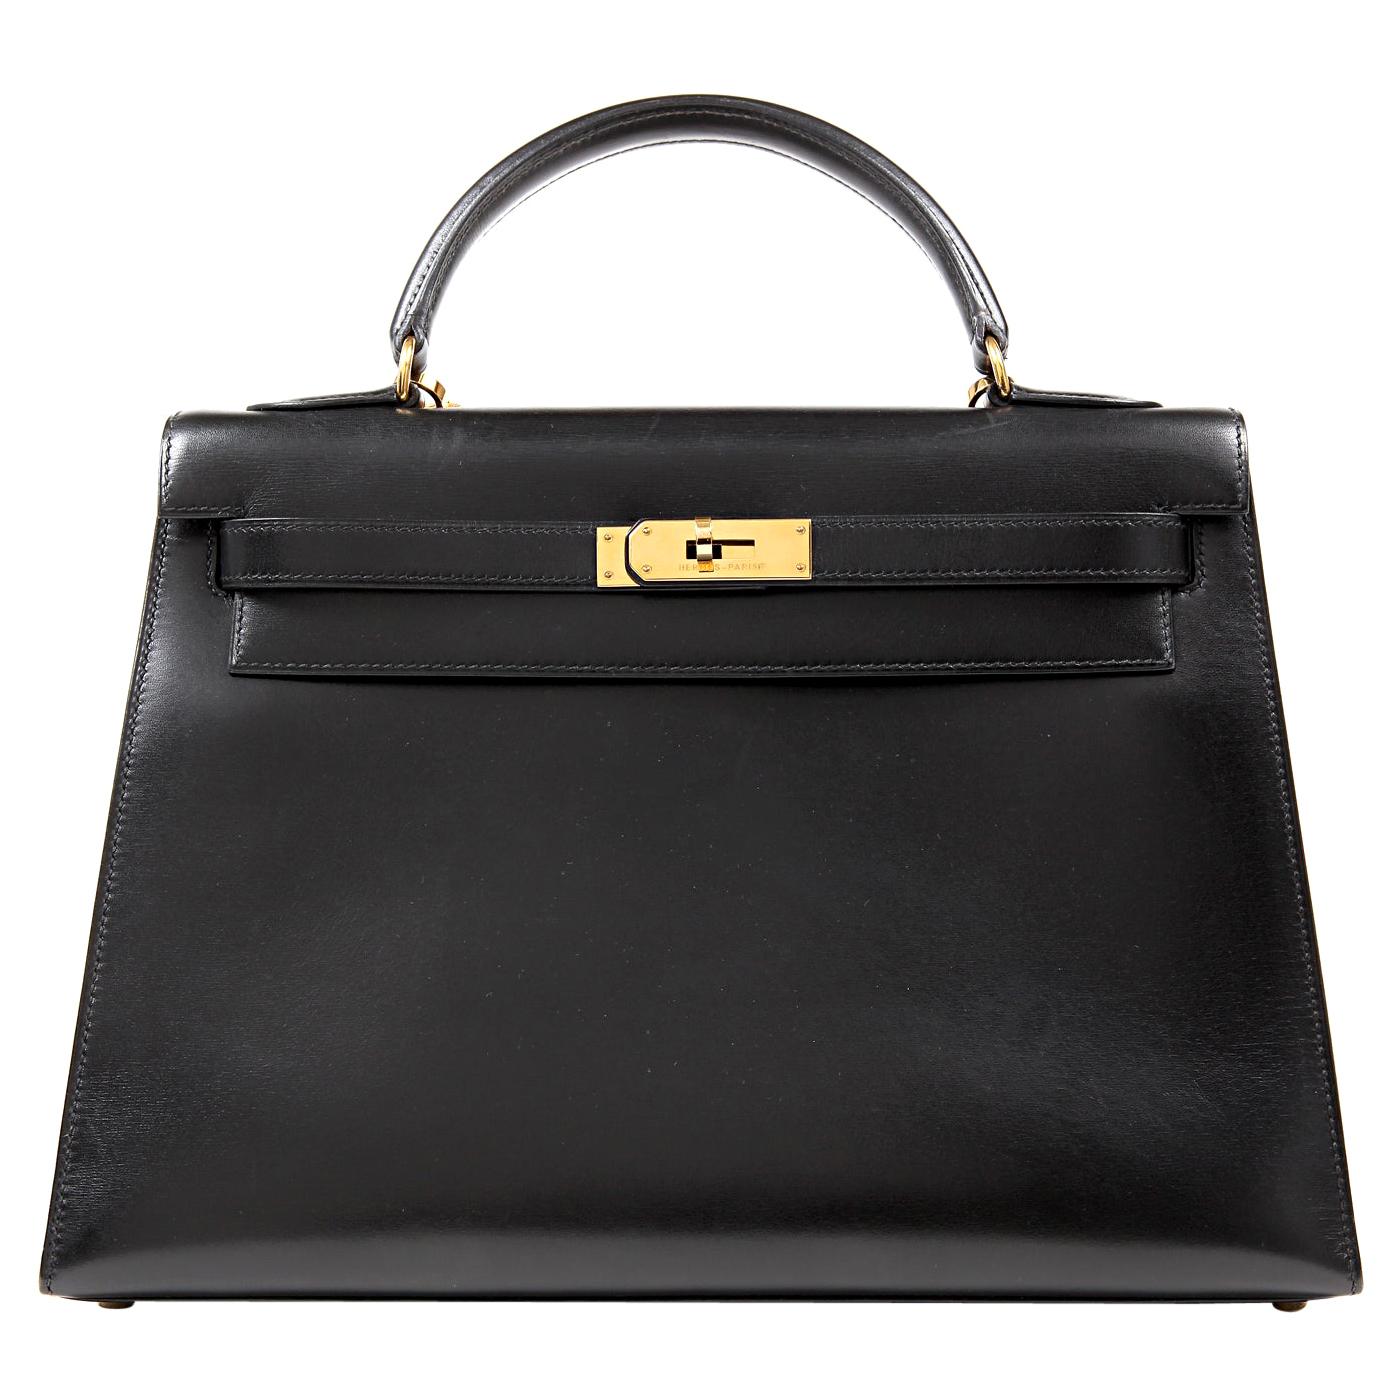 Hermès Black Box Calf 32 cm Kelly Bag